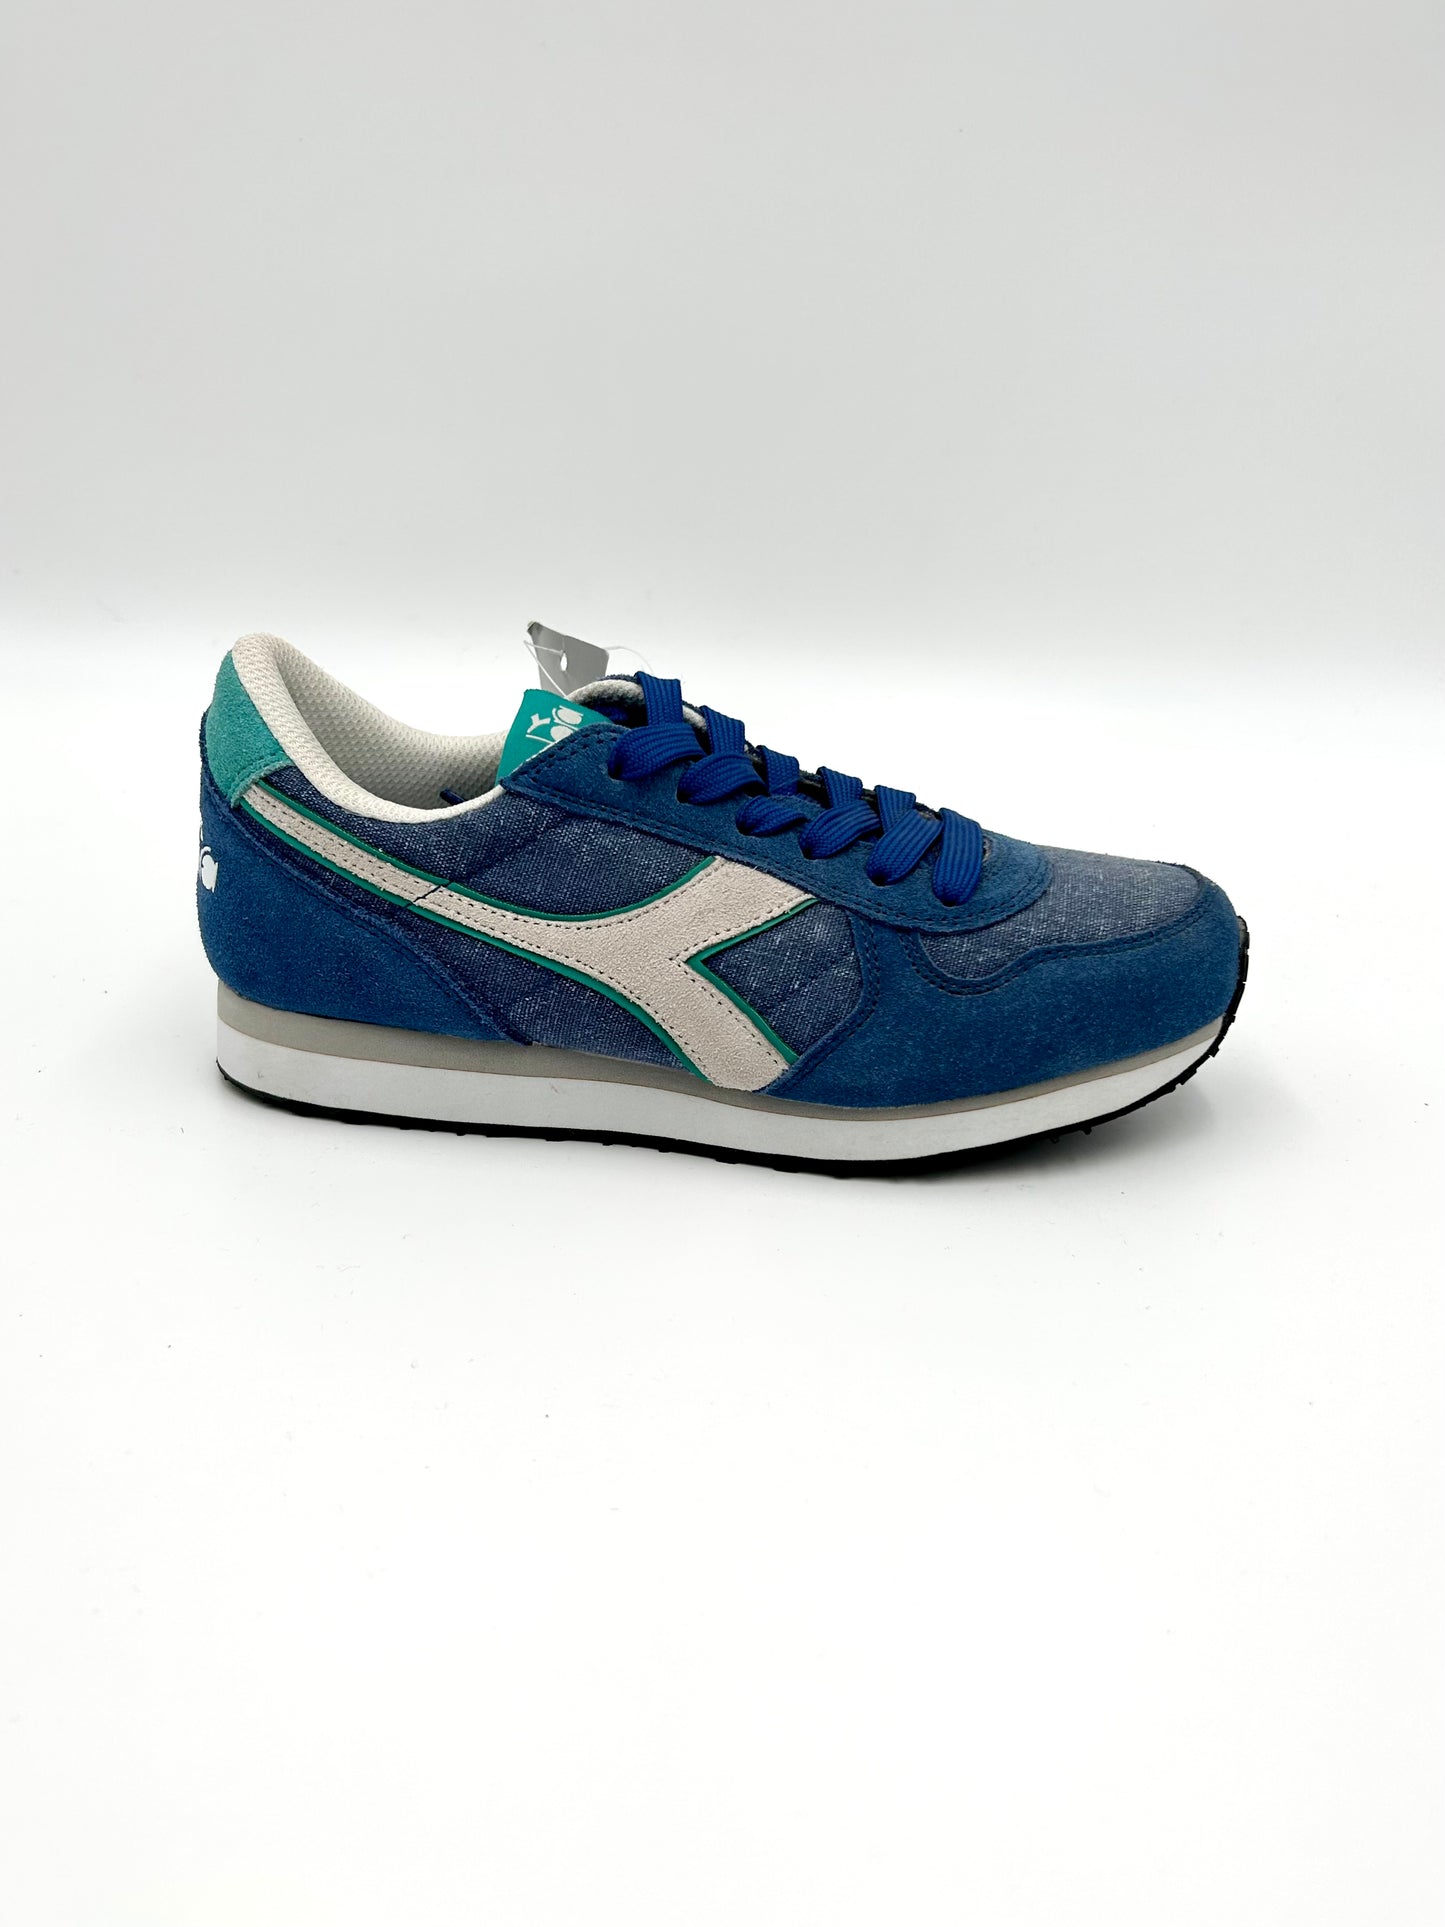 Diadora Sneakers k-run C - blue and light blue - Diadora